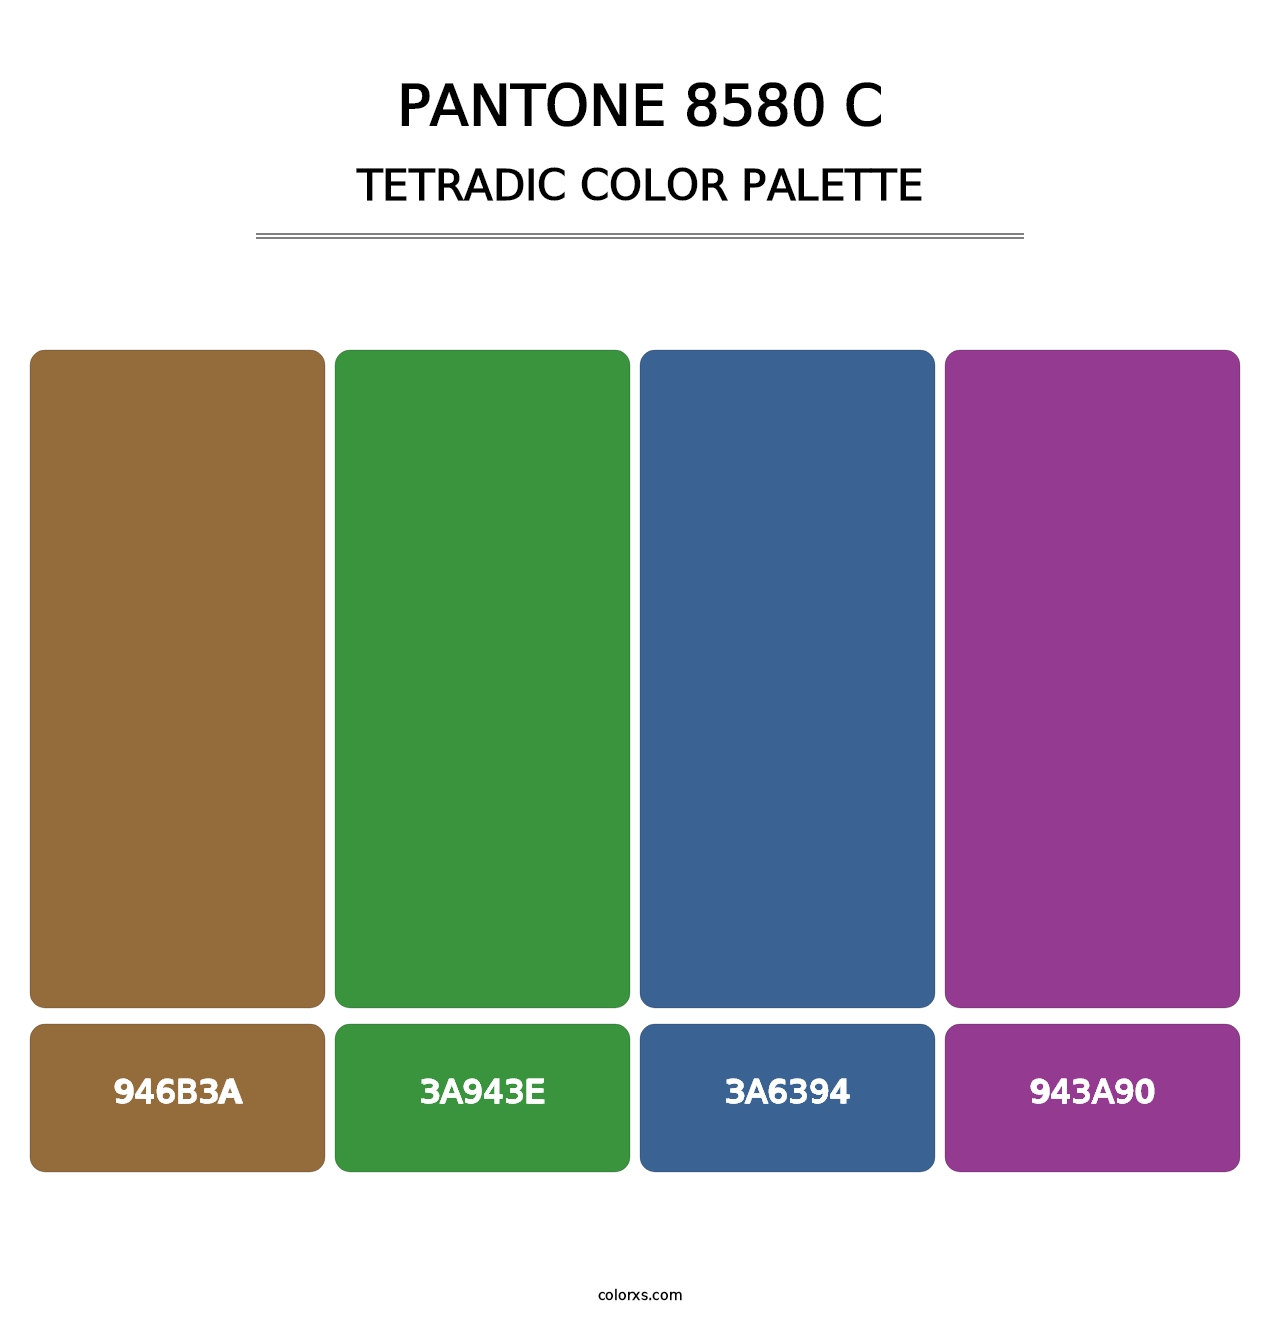 PANTONE 8580 C - Tetradic Color Palette